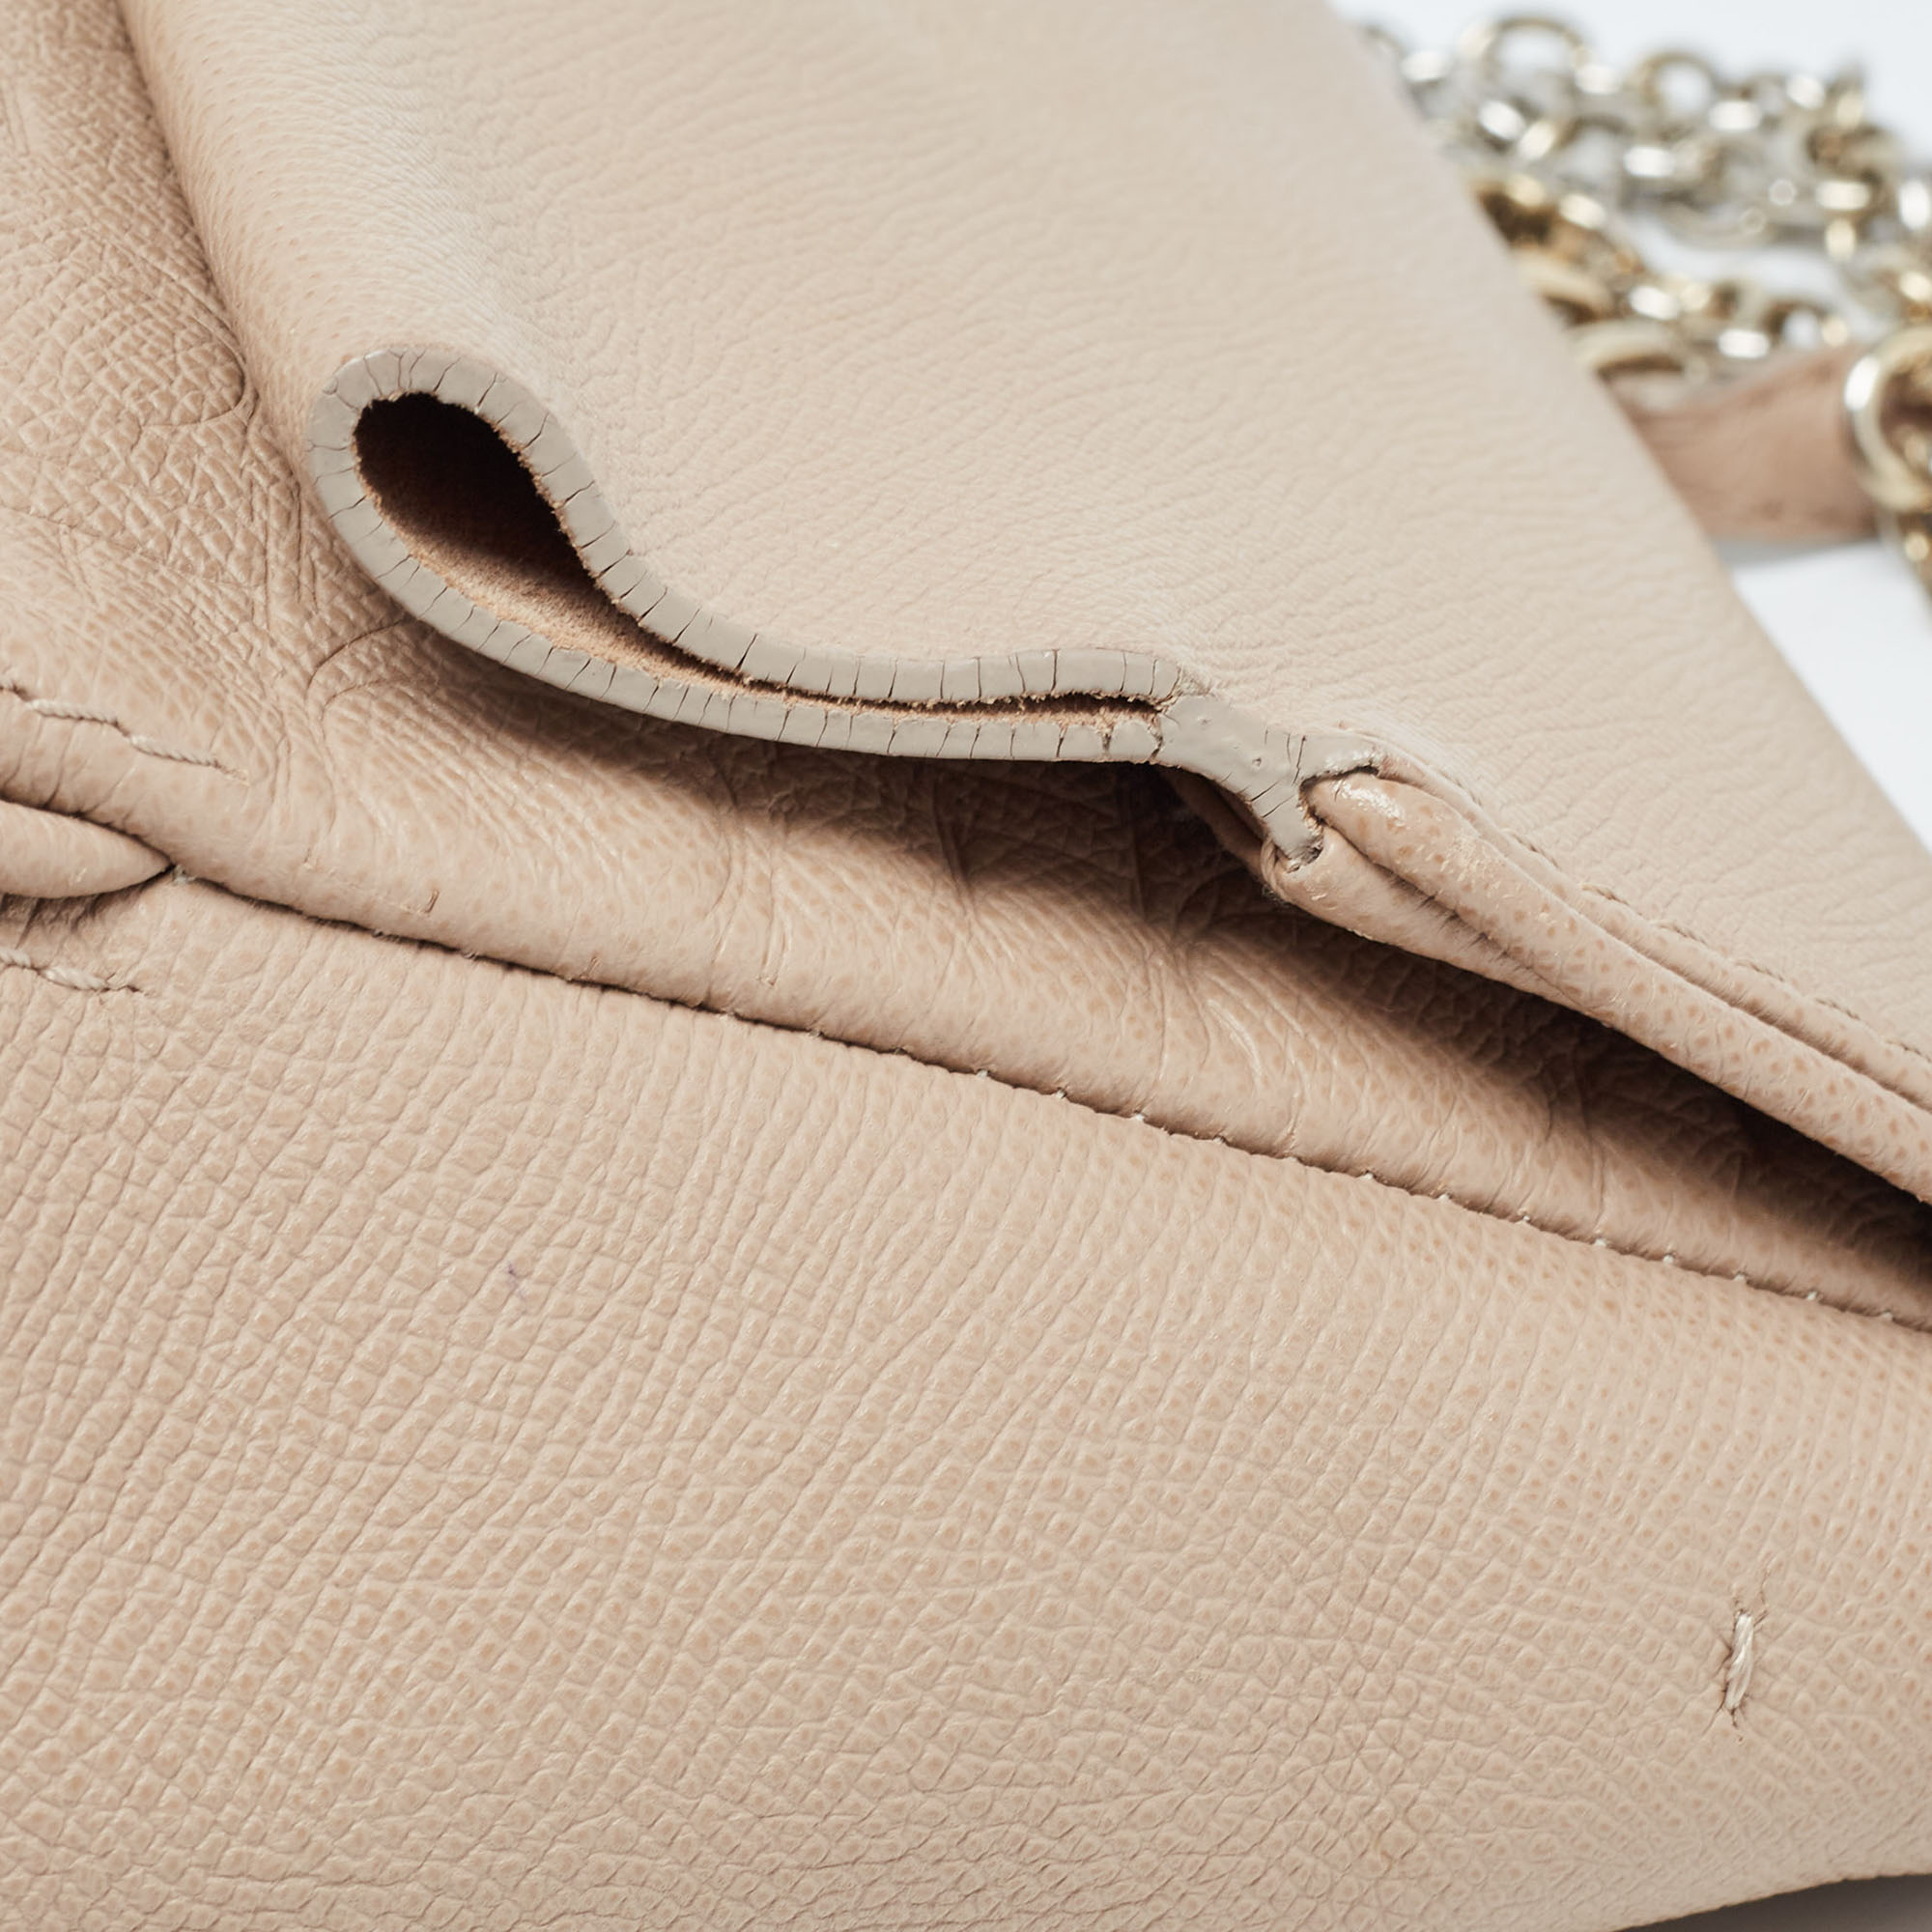 CH Carolina Herrera Beige Leather Small Minuetto Top Handle Bag